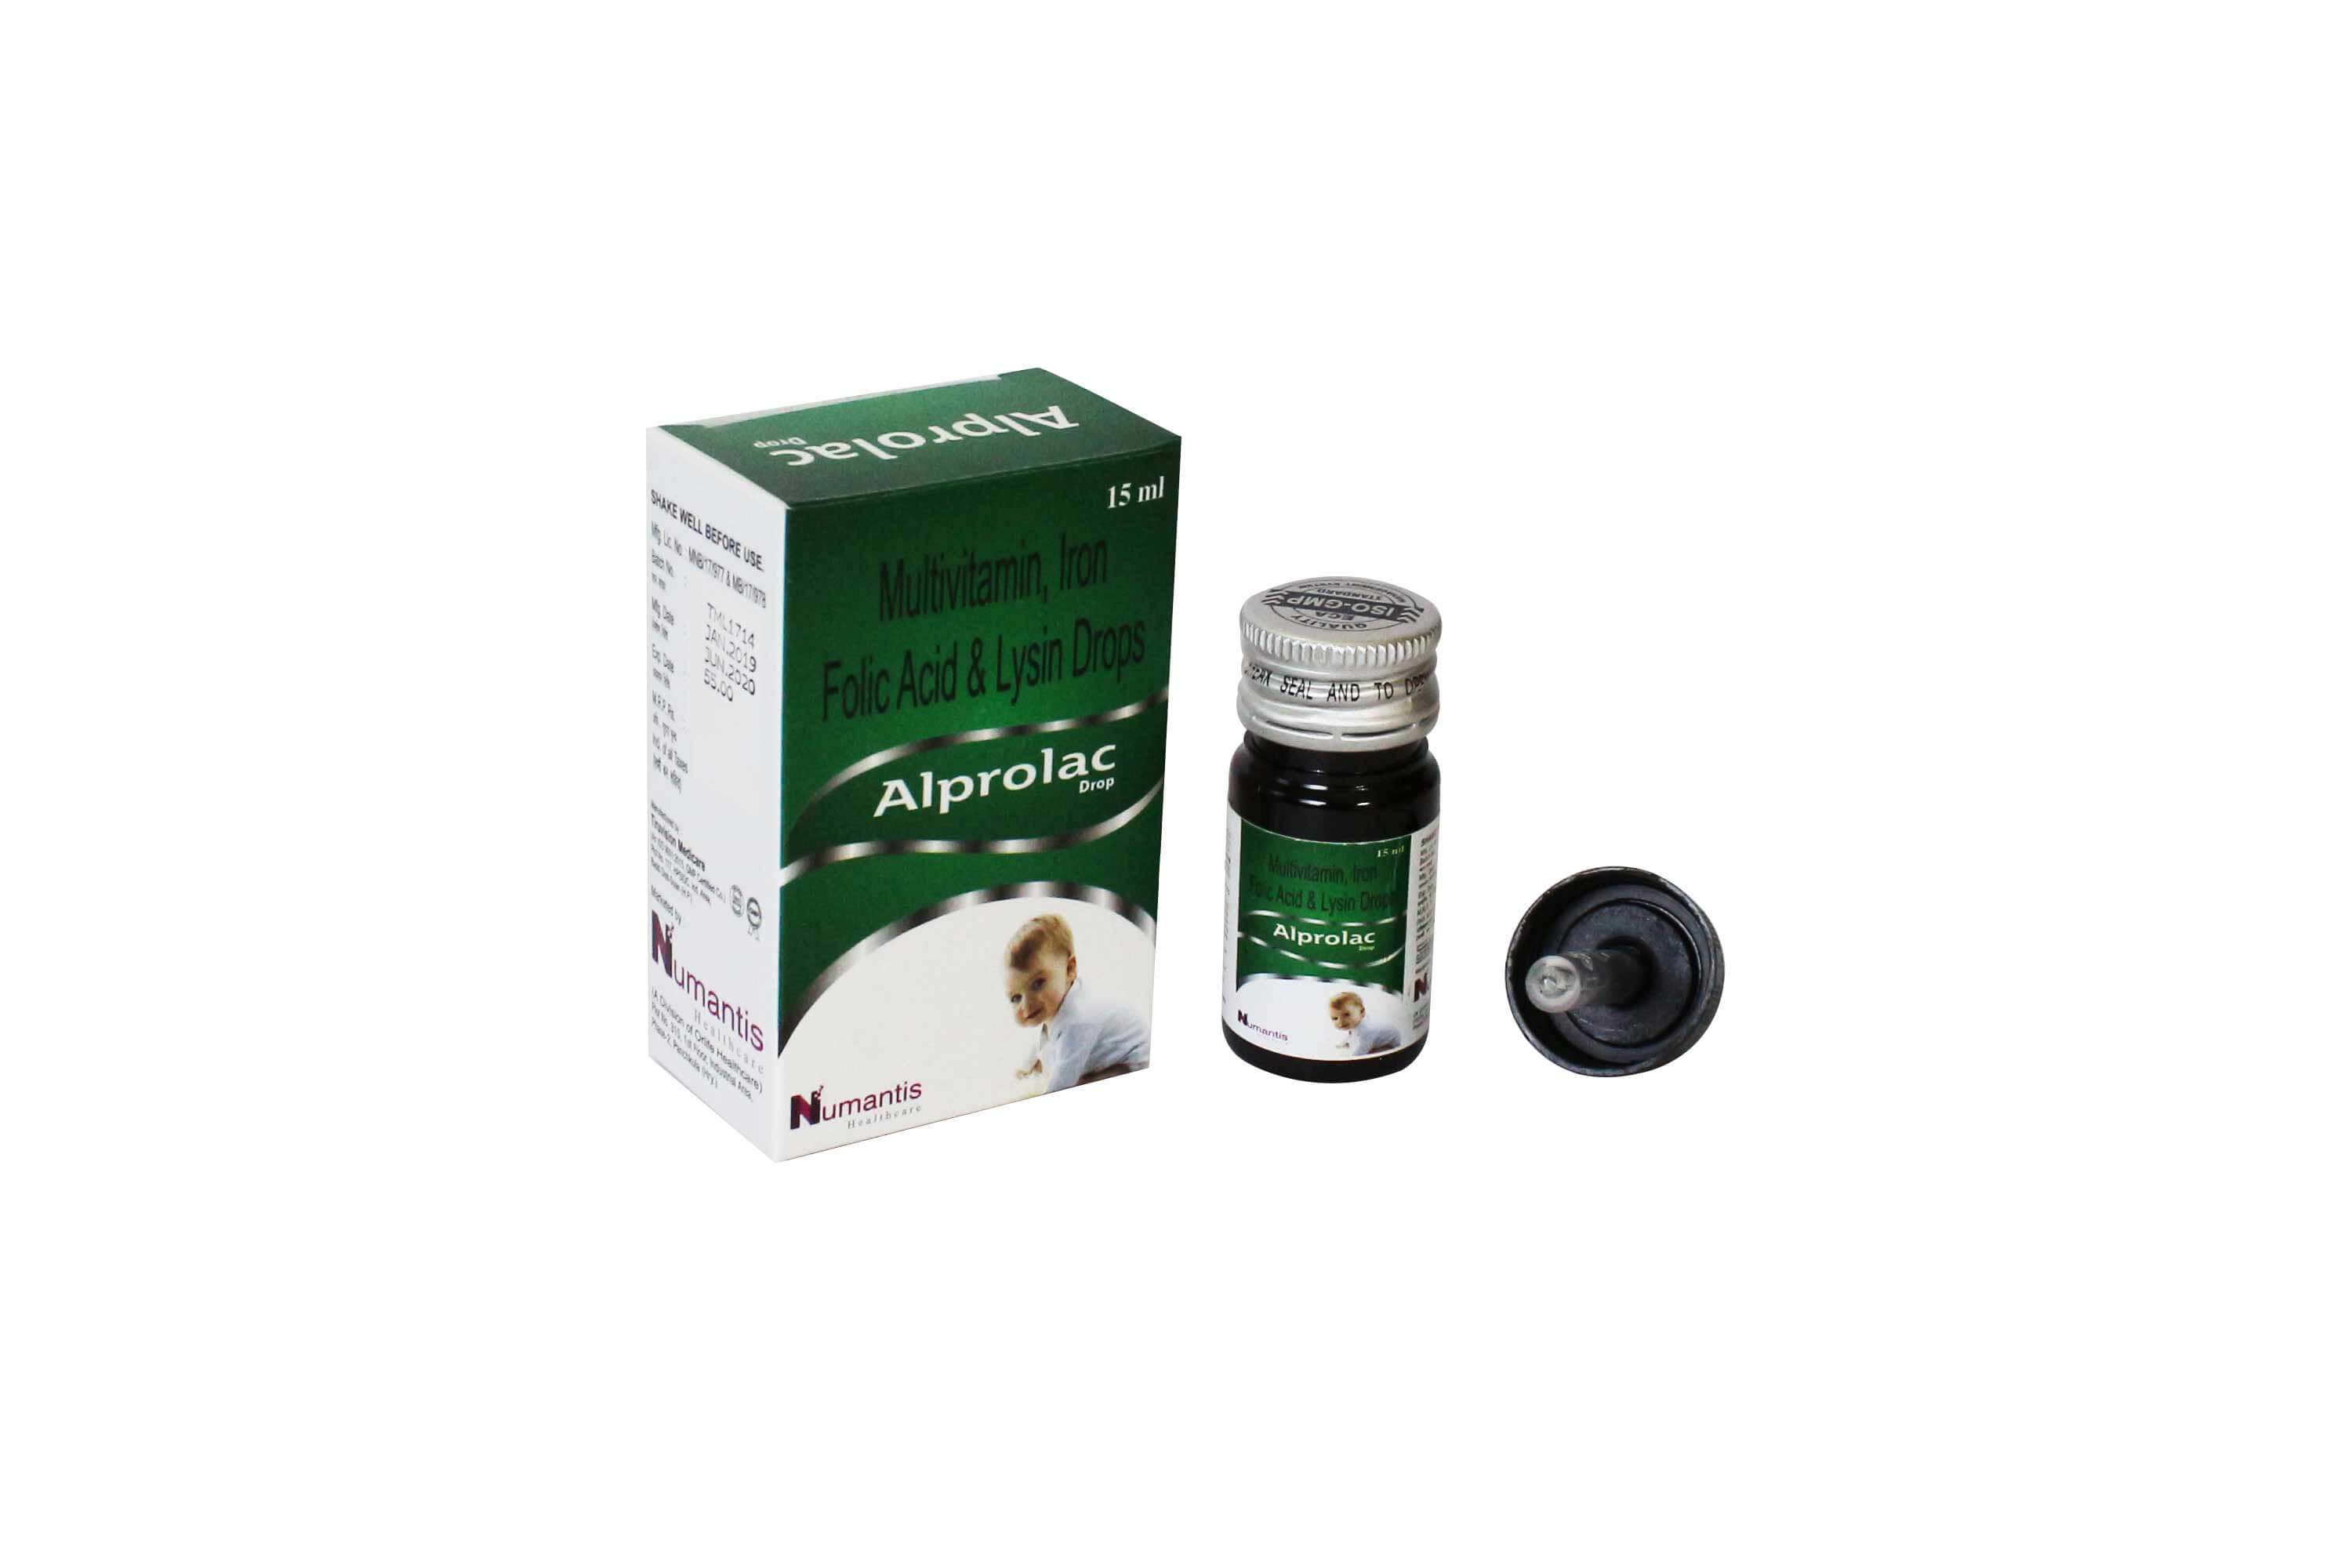 Product Name: Alprolac, Compositions of Alprolac are Multivitamin Iron Folic Acid & Lysin Drops - Numantis Healthcare